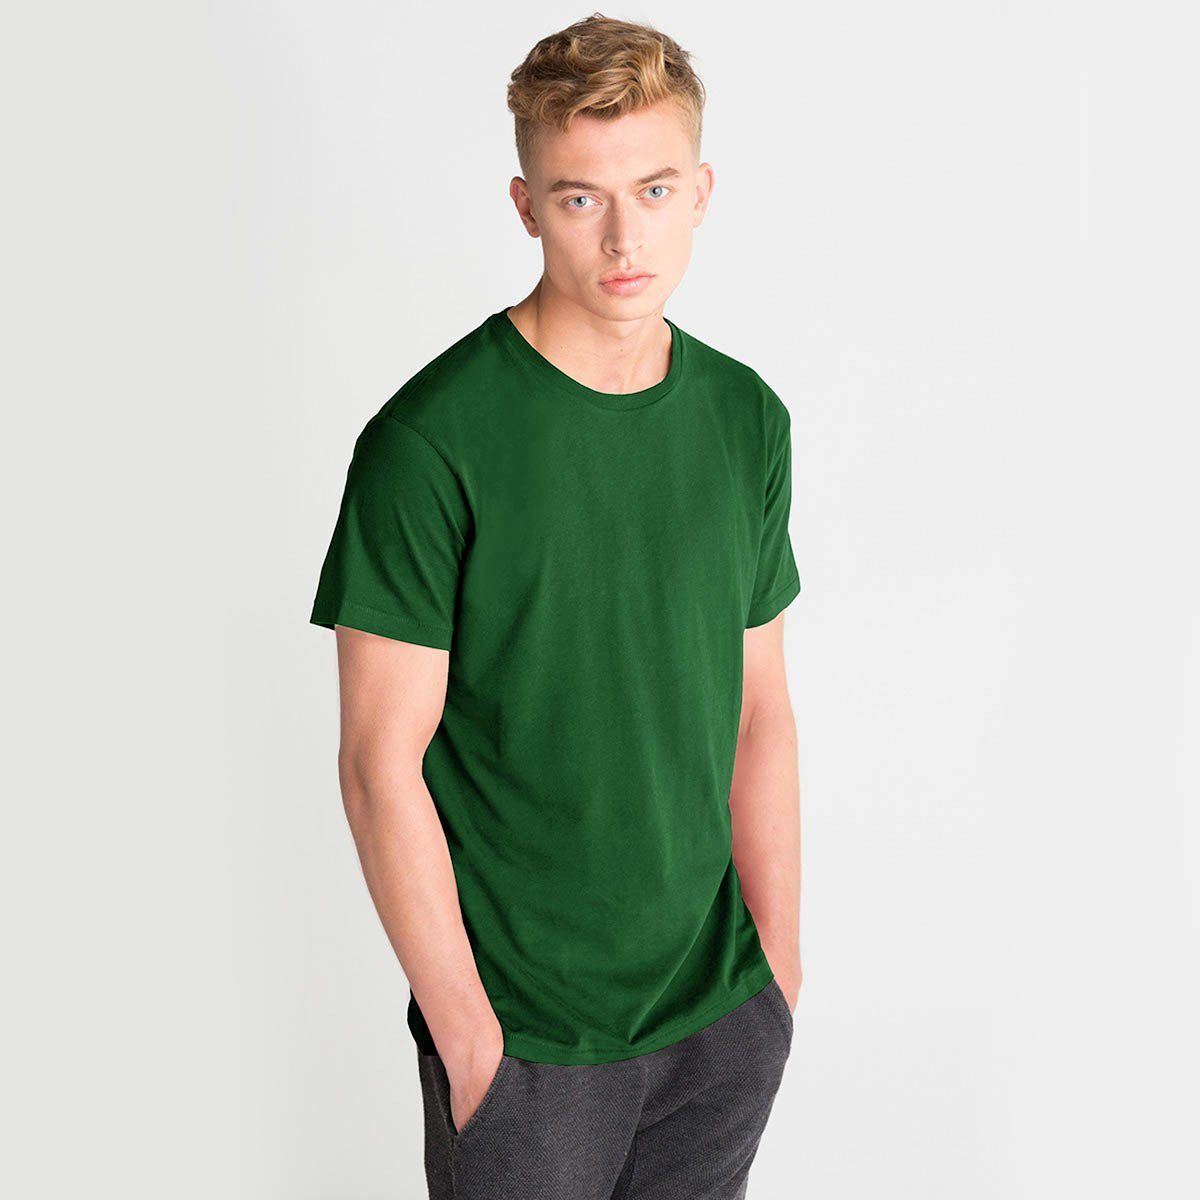 LE Bokrid Short Sleeve B Quality Tee Shirt B Quality Image Dark Green XL 